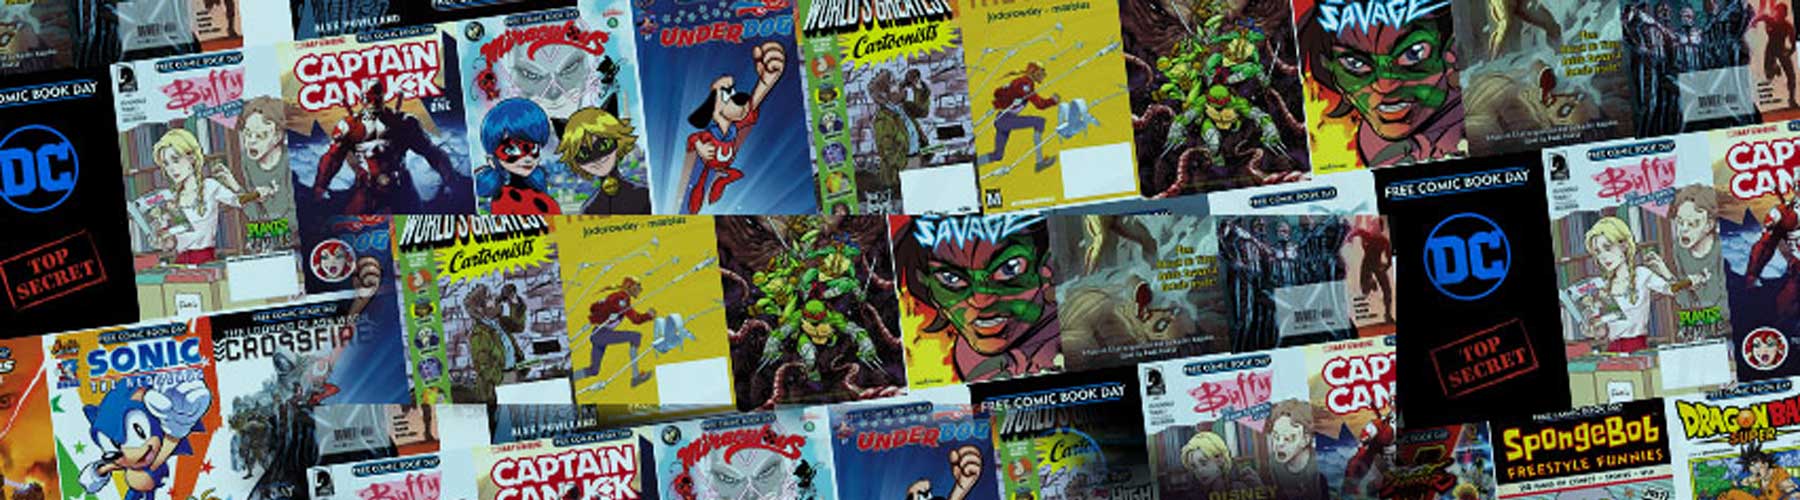 New DC Graphic Novels